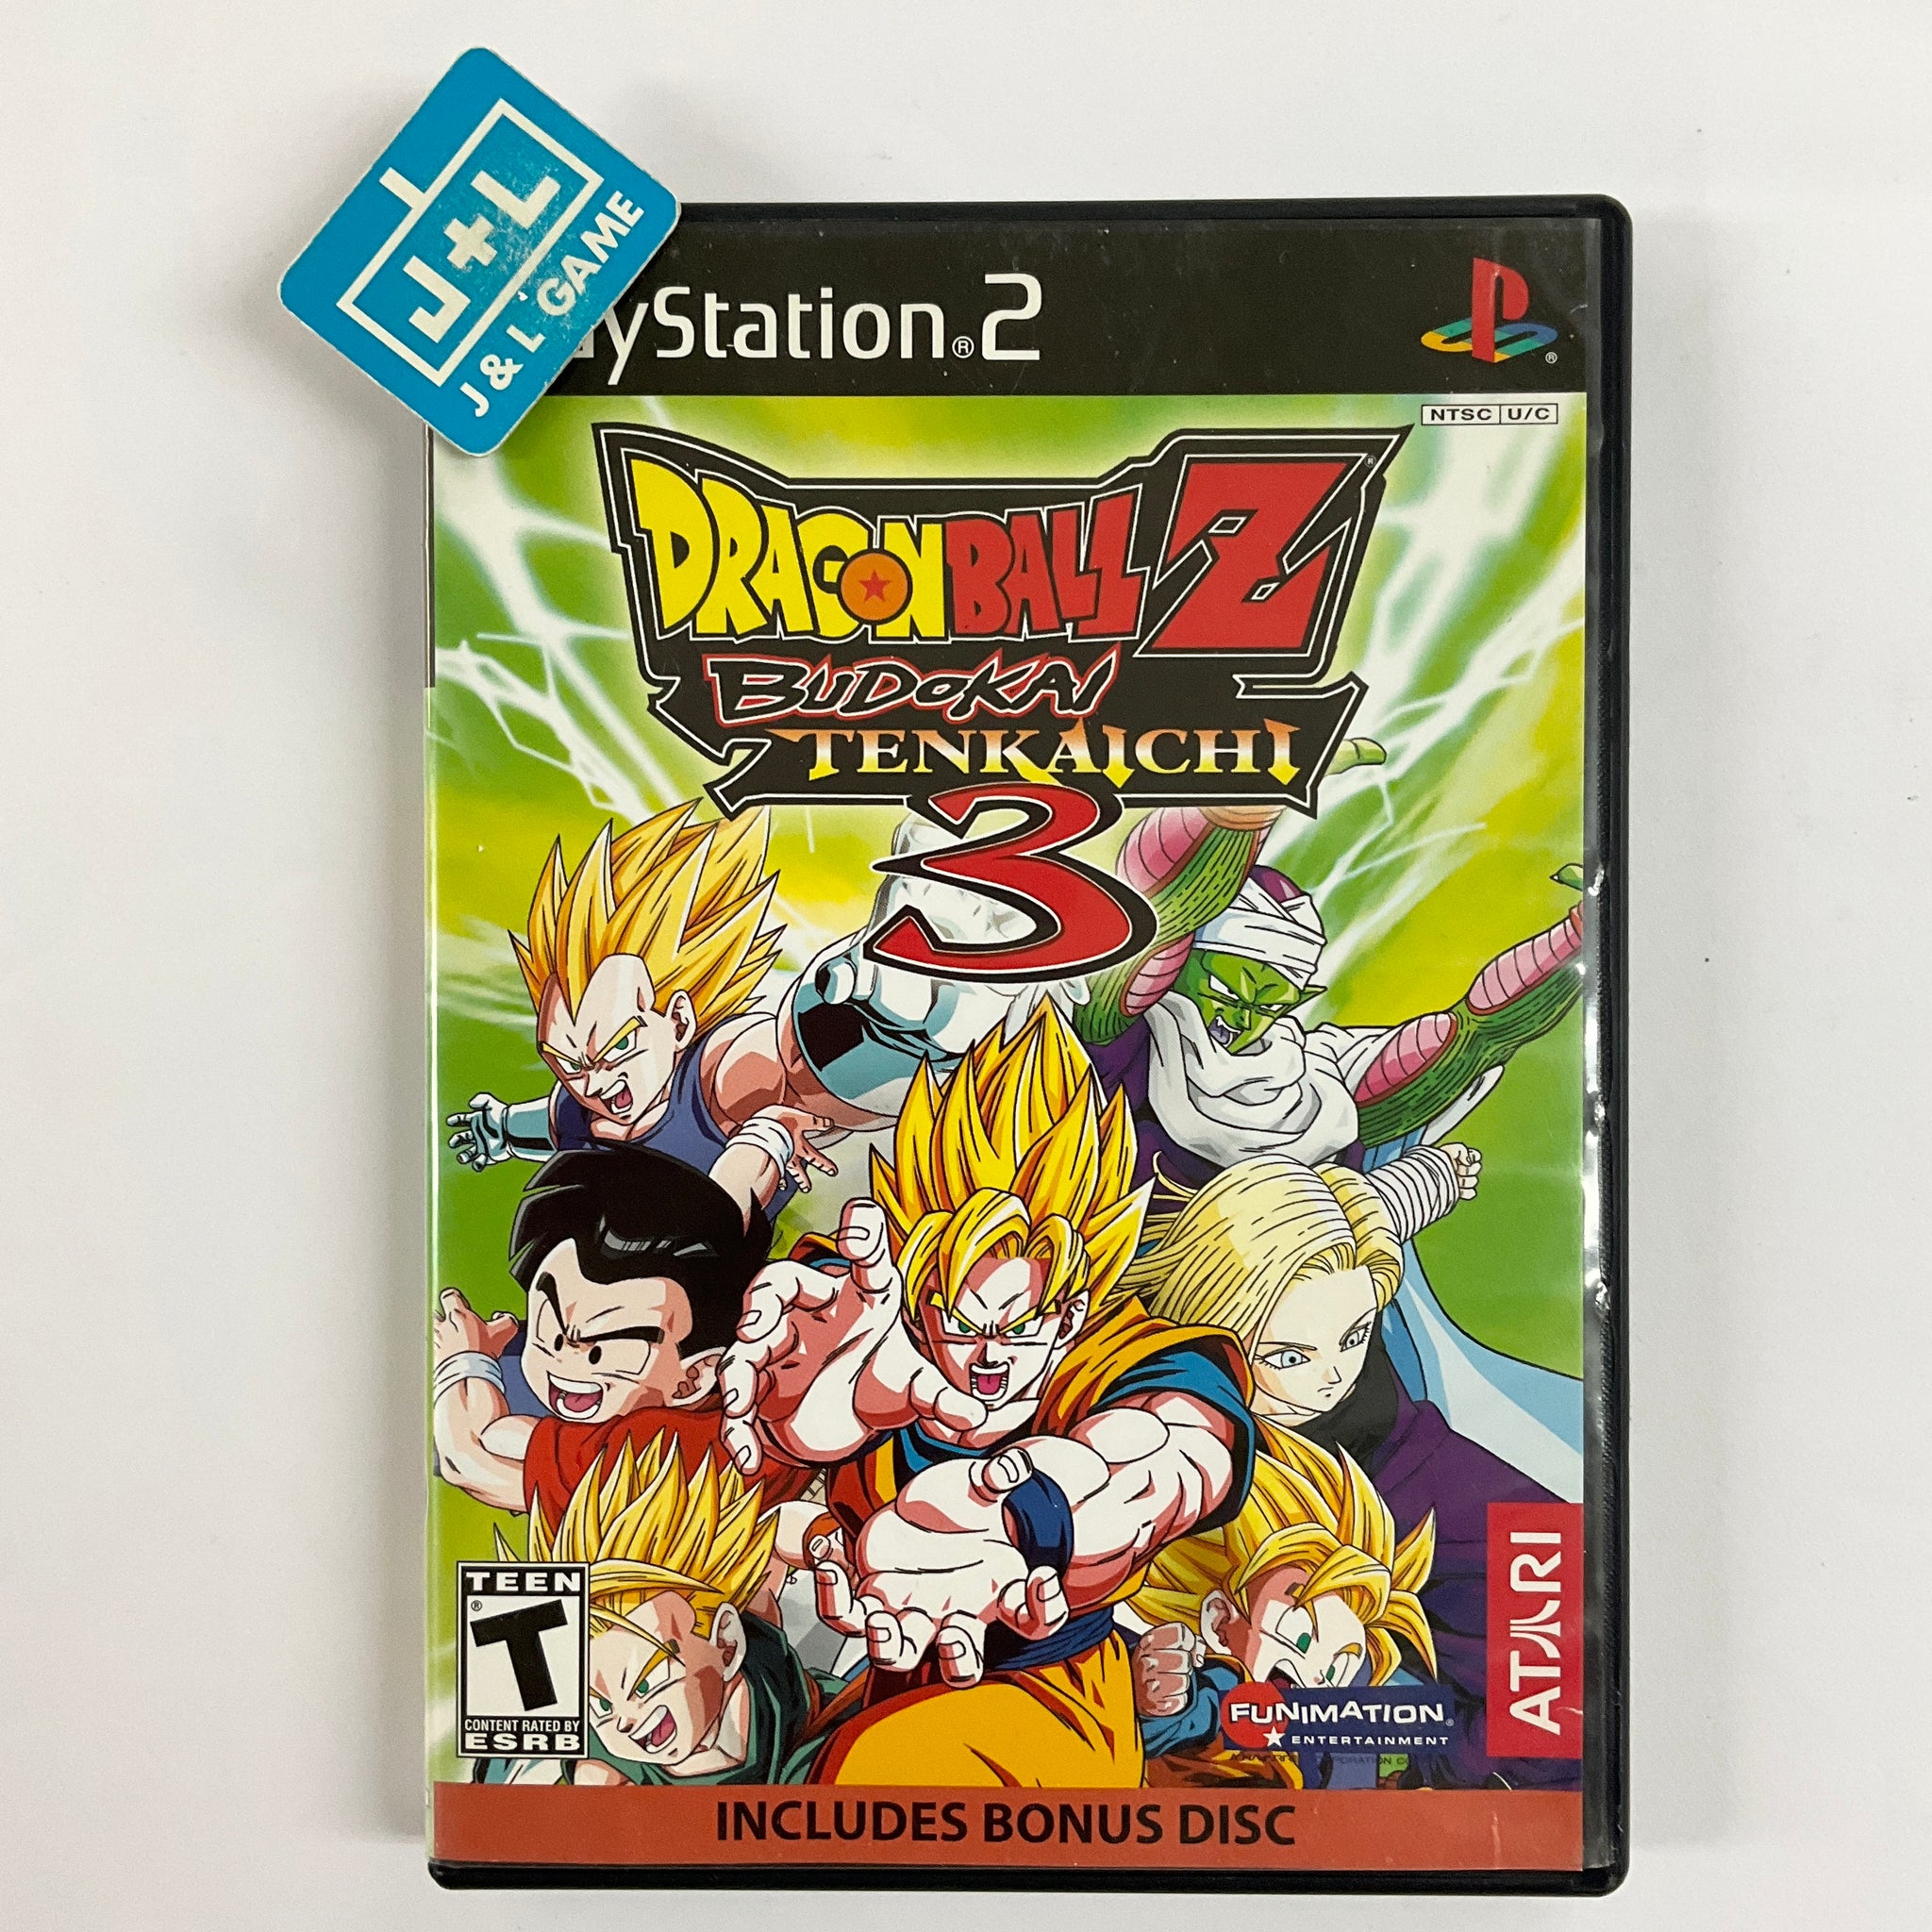 Dragon Ball Z Budokai Tenkaichi 3 PS2 - ARTWORK ONLY *No Game/Manual*